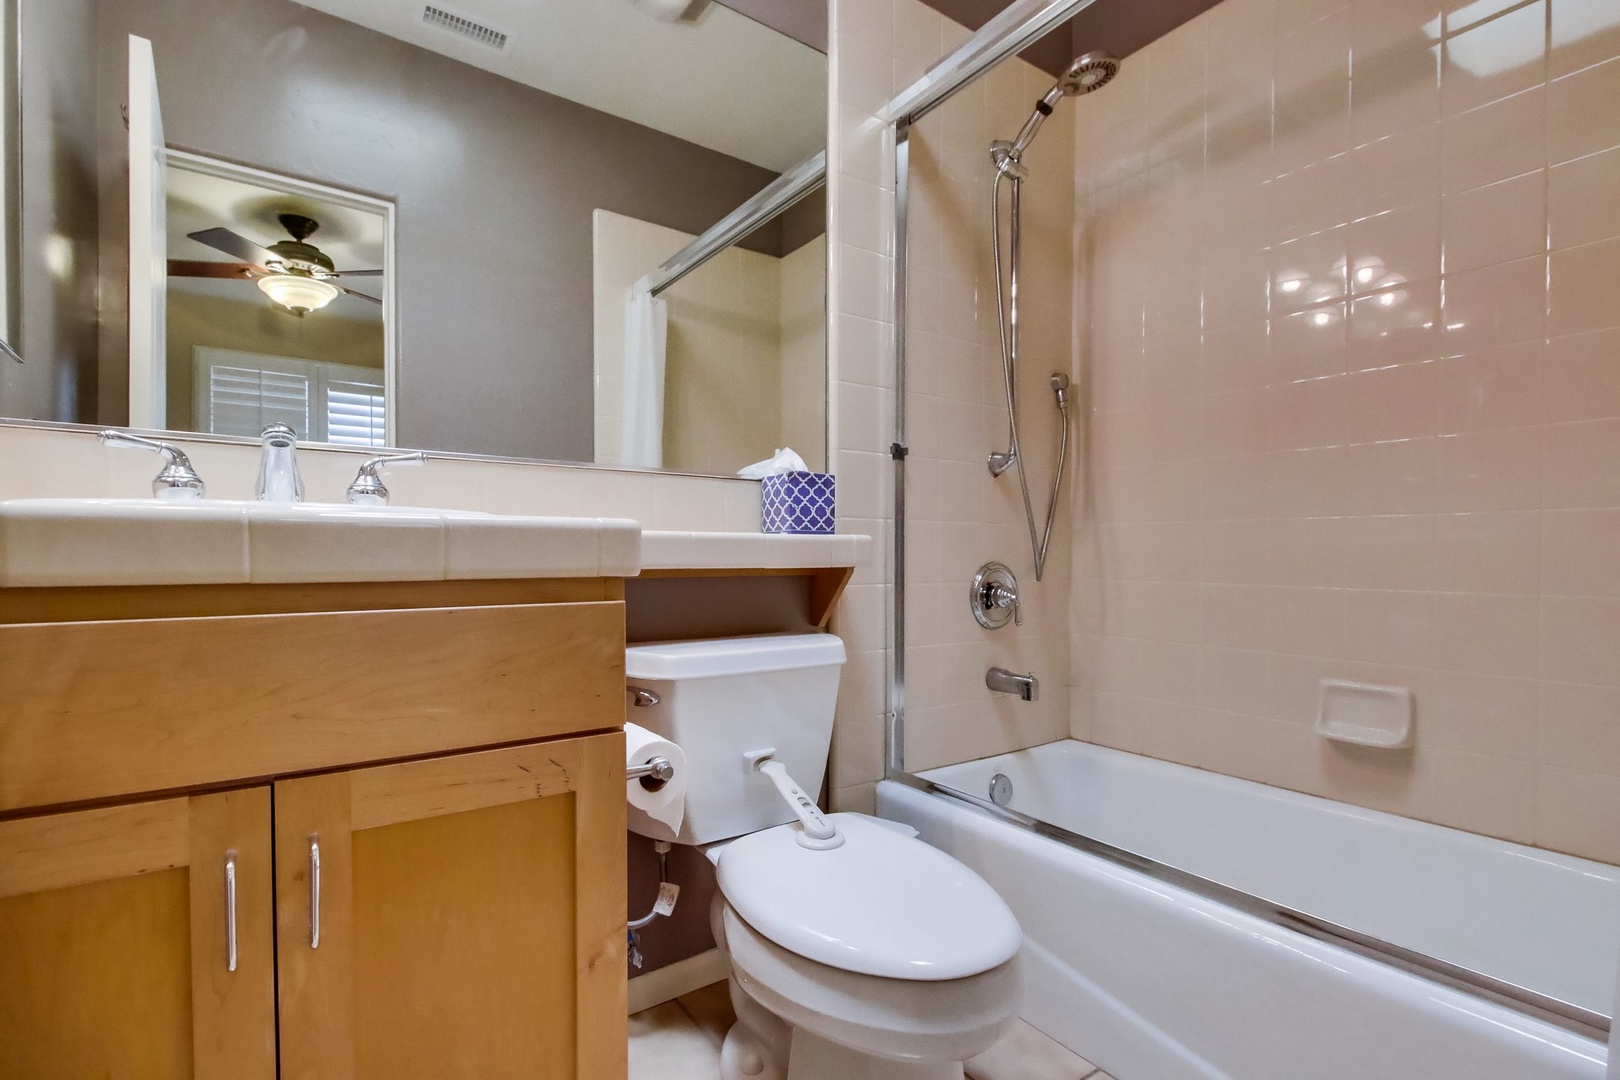 Bedroom 2 bathroom with shower/tub combo